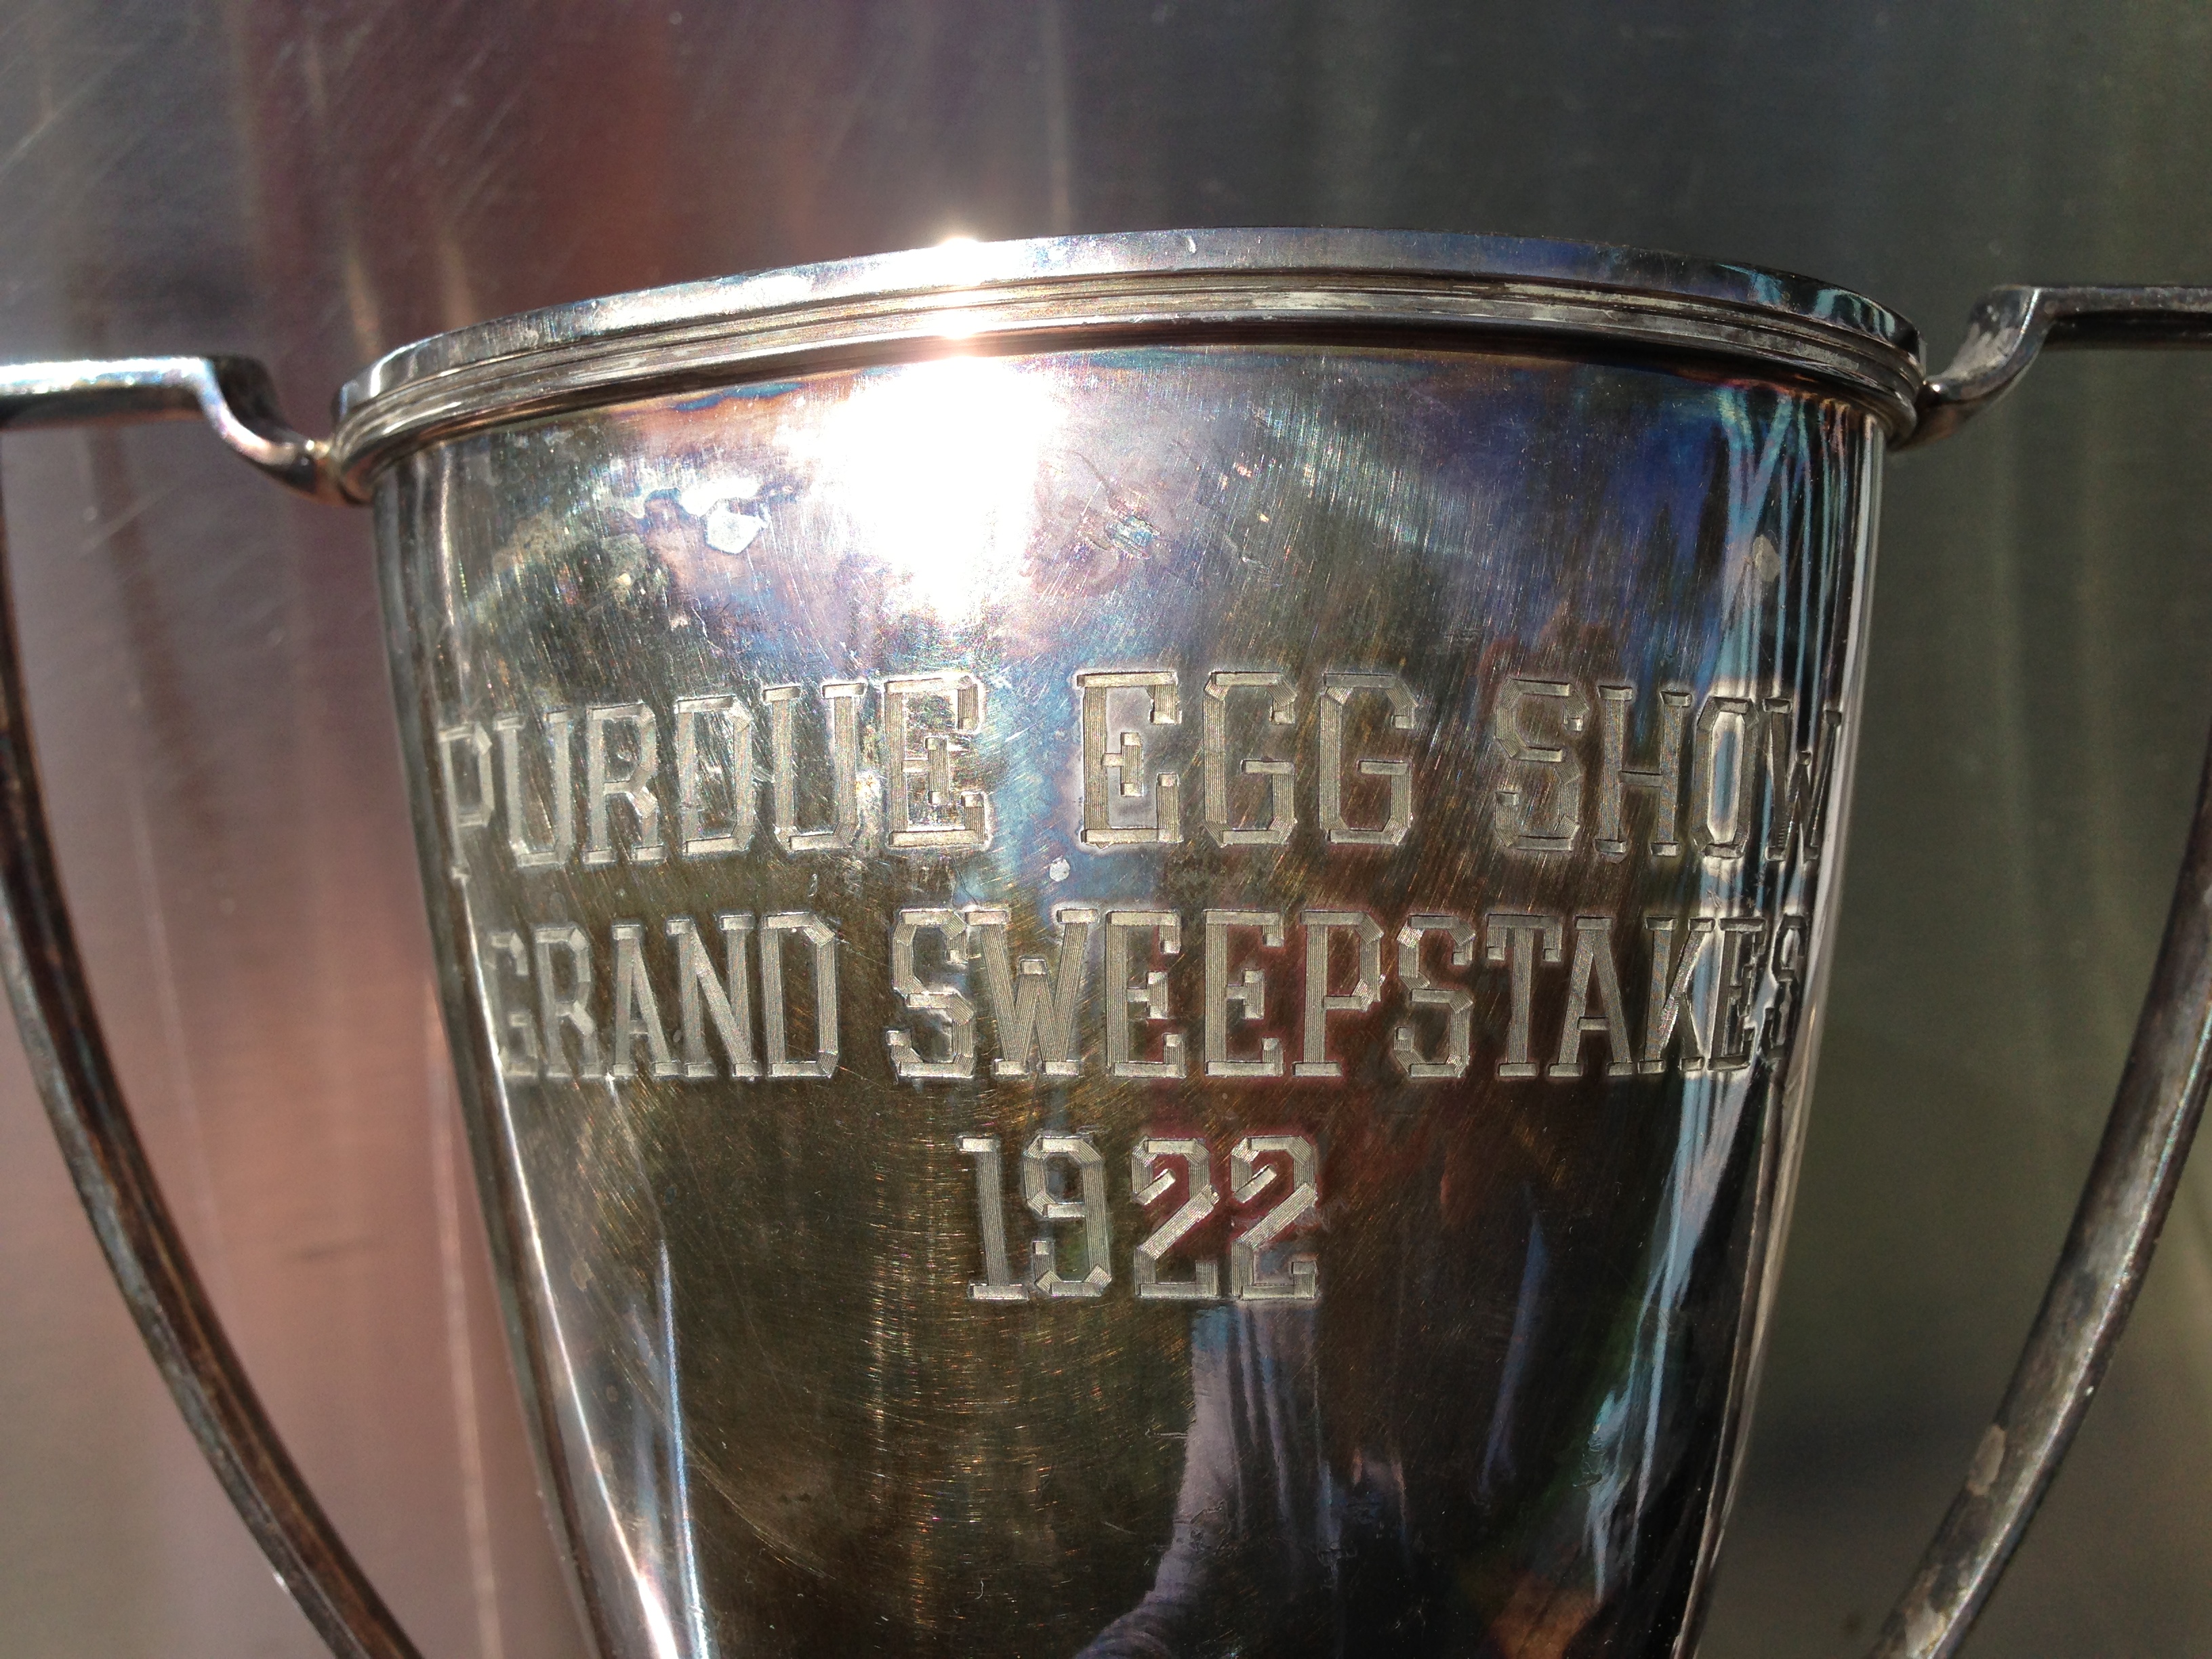 Purdue Egg Show Grand Sweepstakes Winner 1922